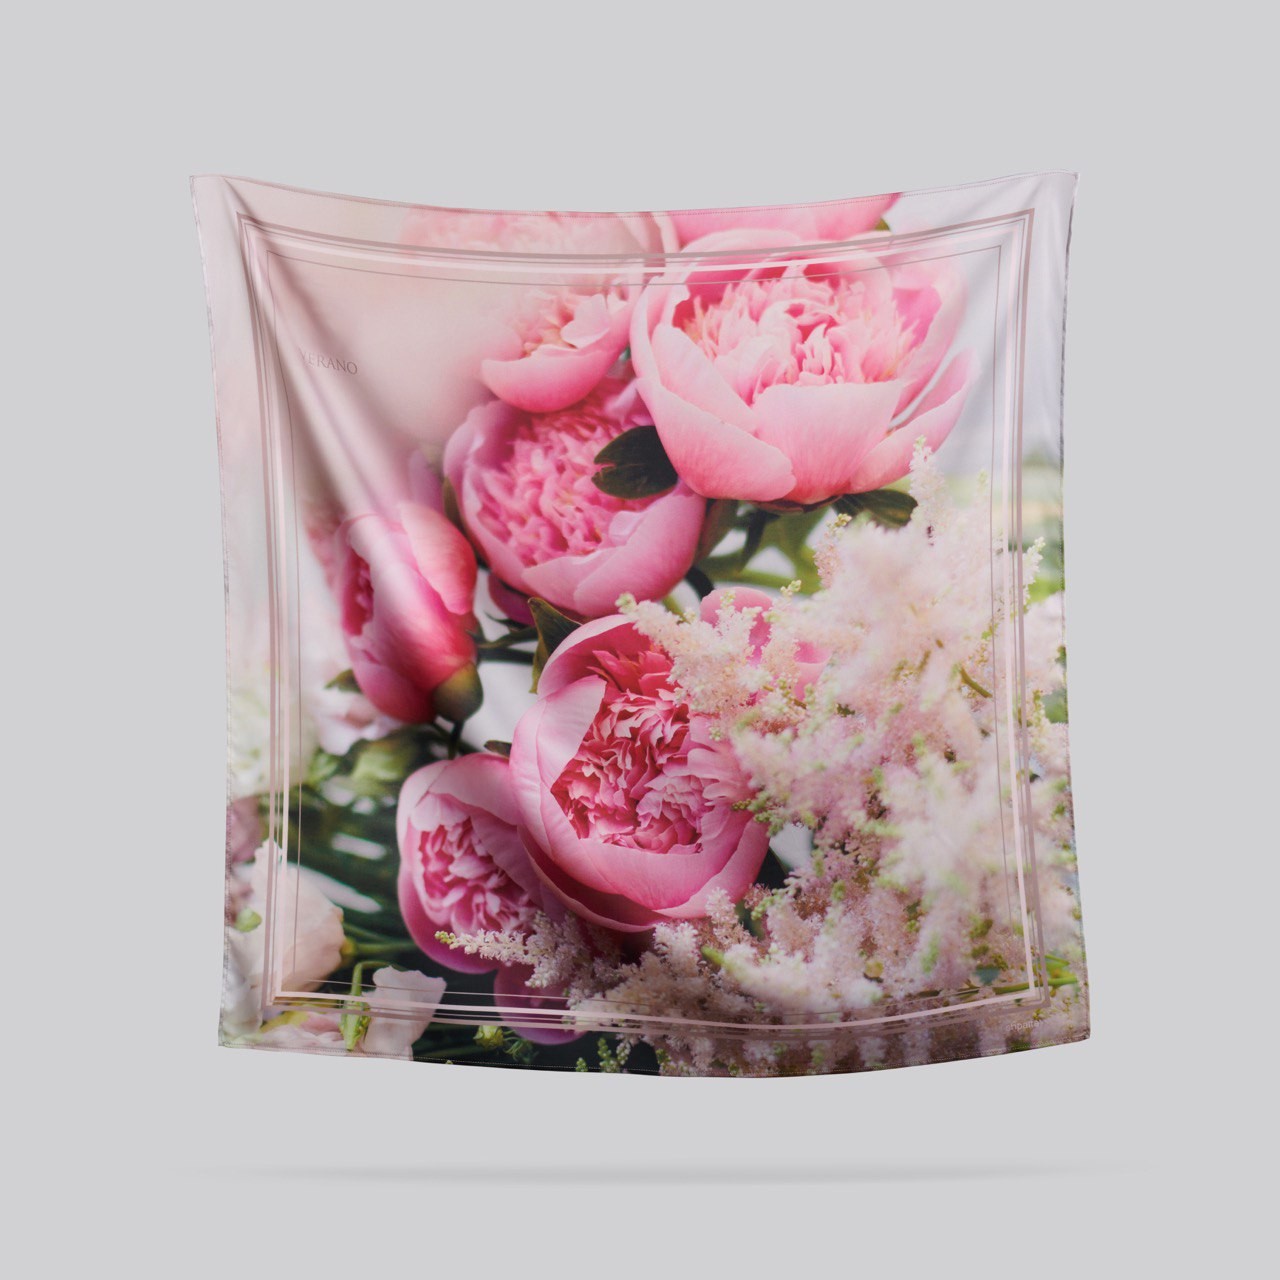 Scarf "Peonies" Size 85*85 cm floral silk shawl from Ukraine